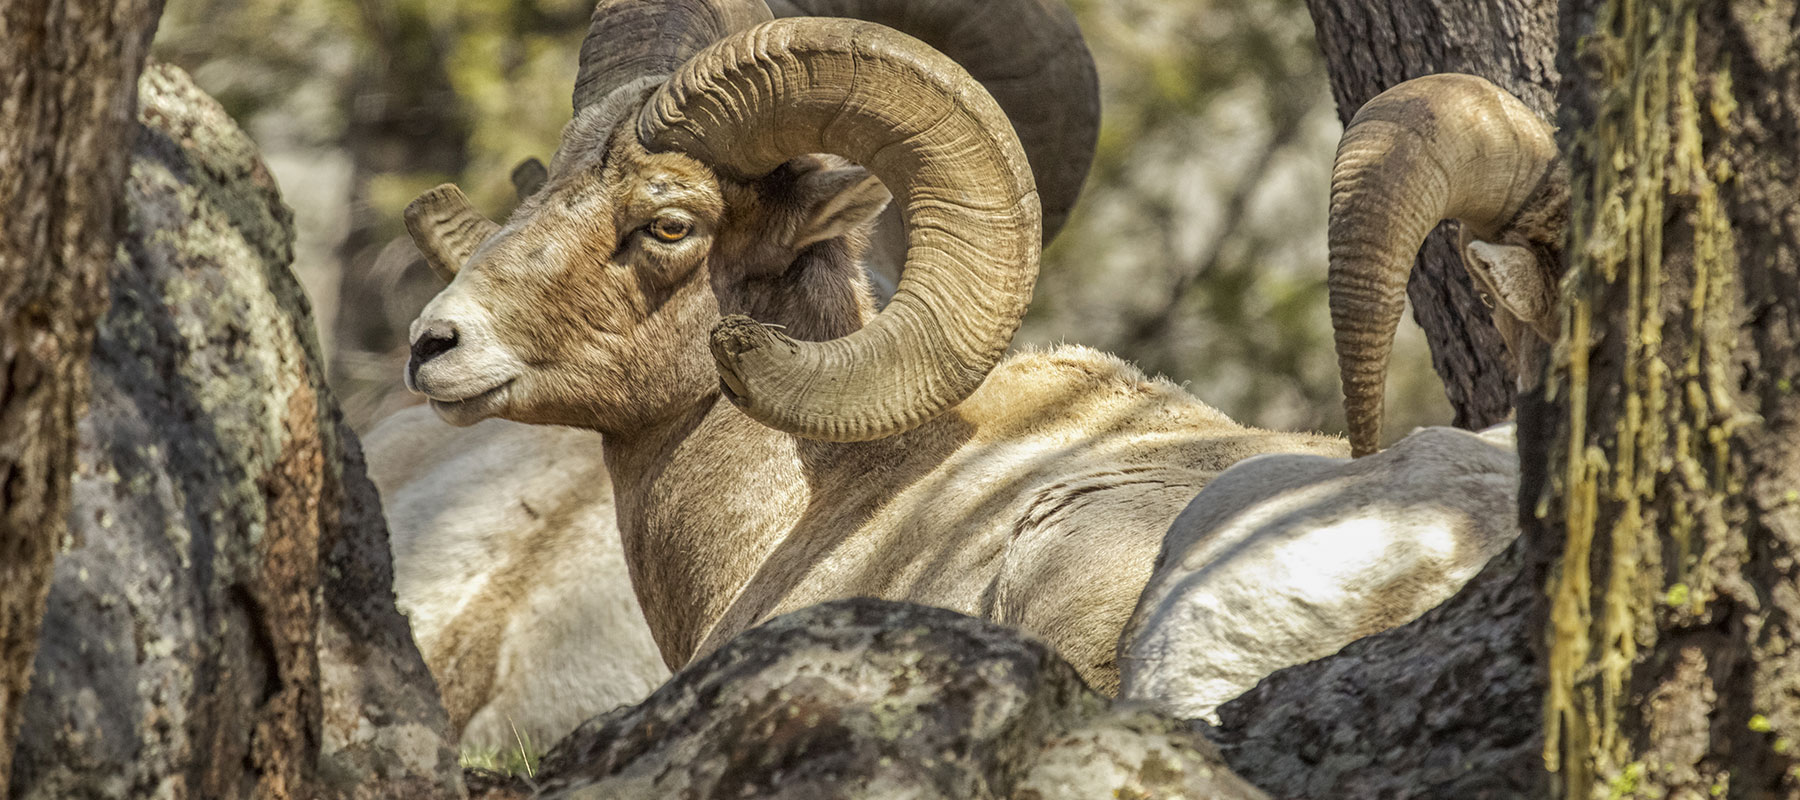 Bighorn Sheep on Jackson Hole Safari Tour - Buffalo Roam Tours